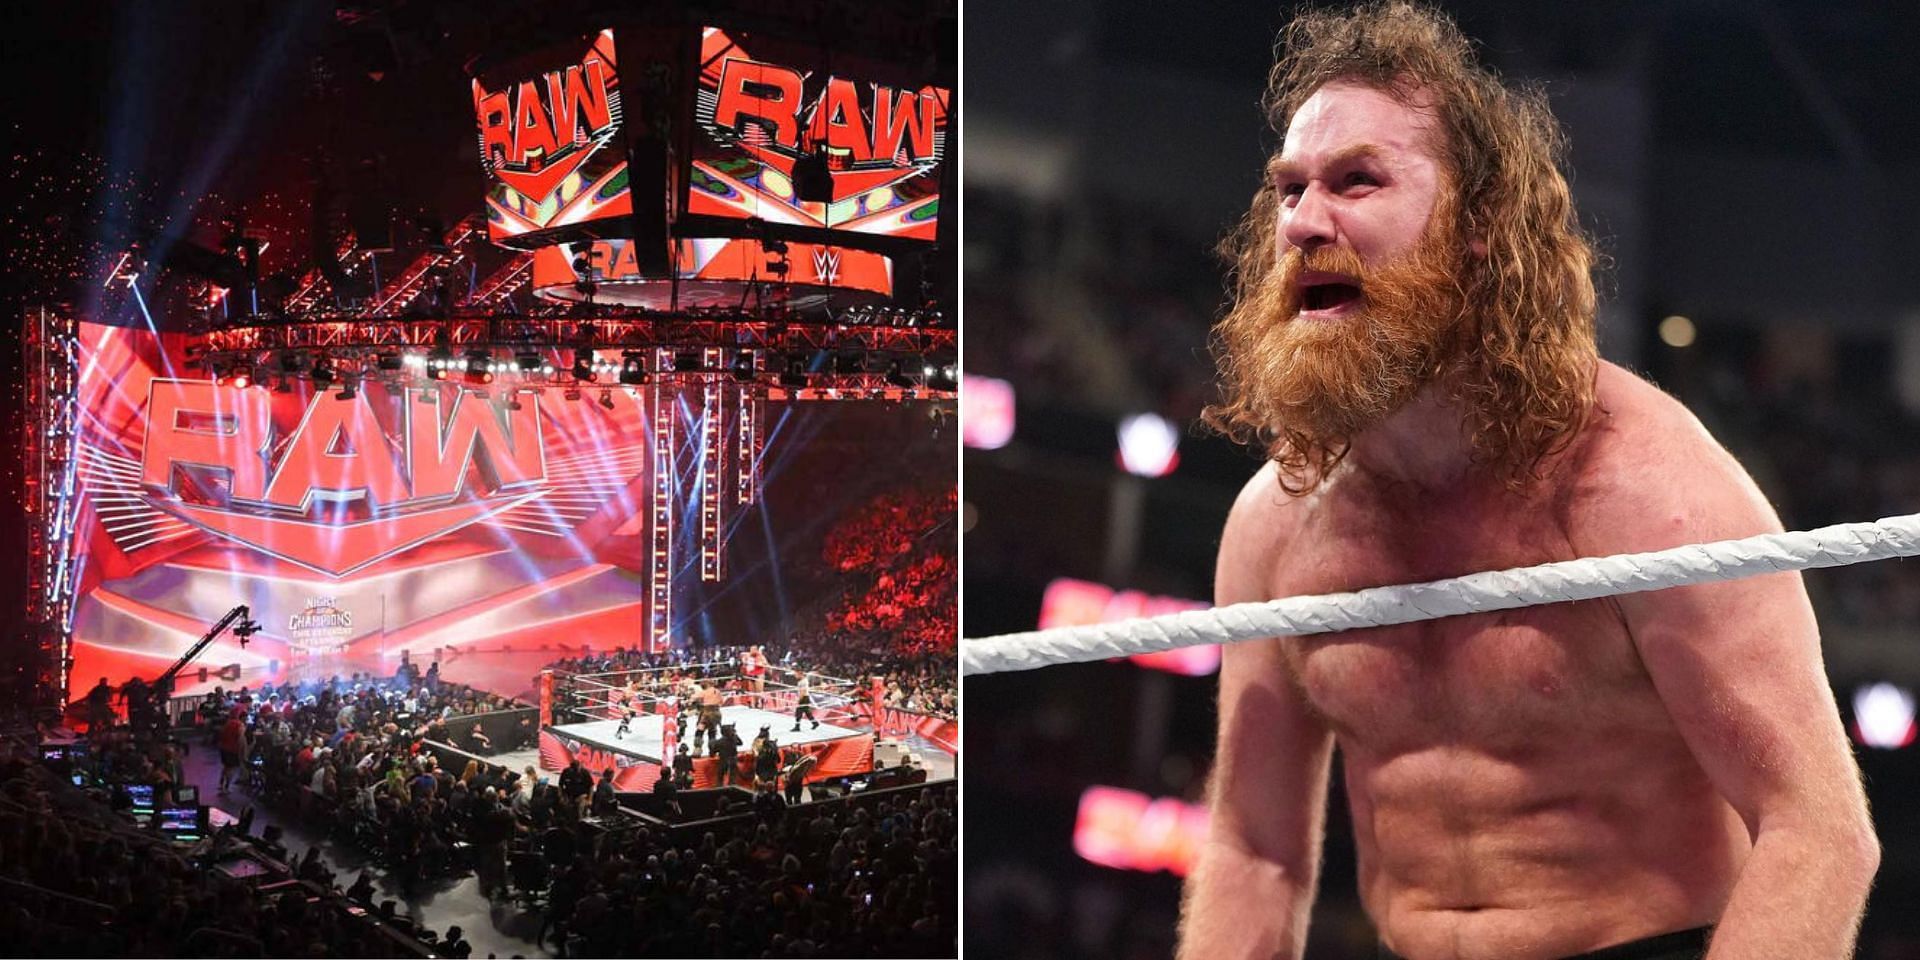 Sami Zayn suffered a defeat on WWE RAW this week